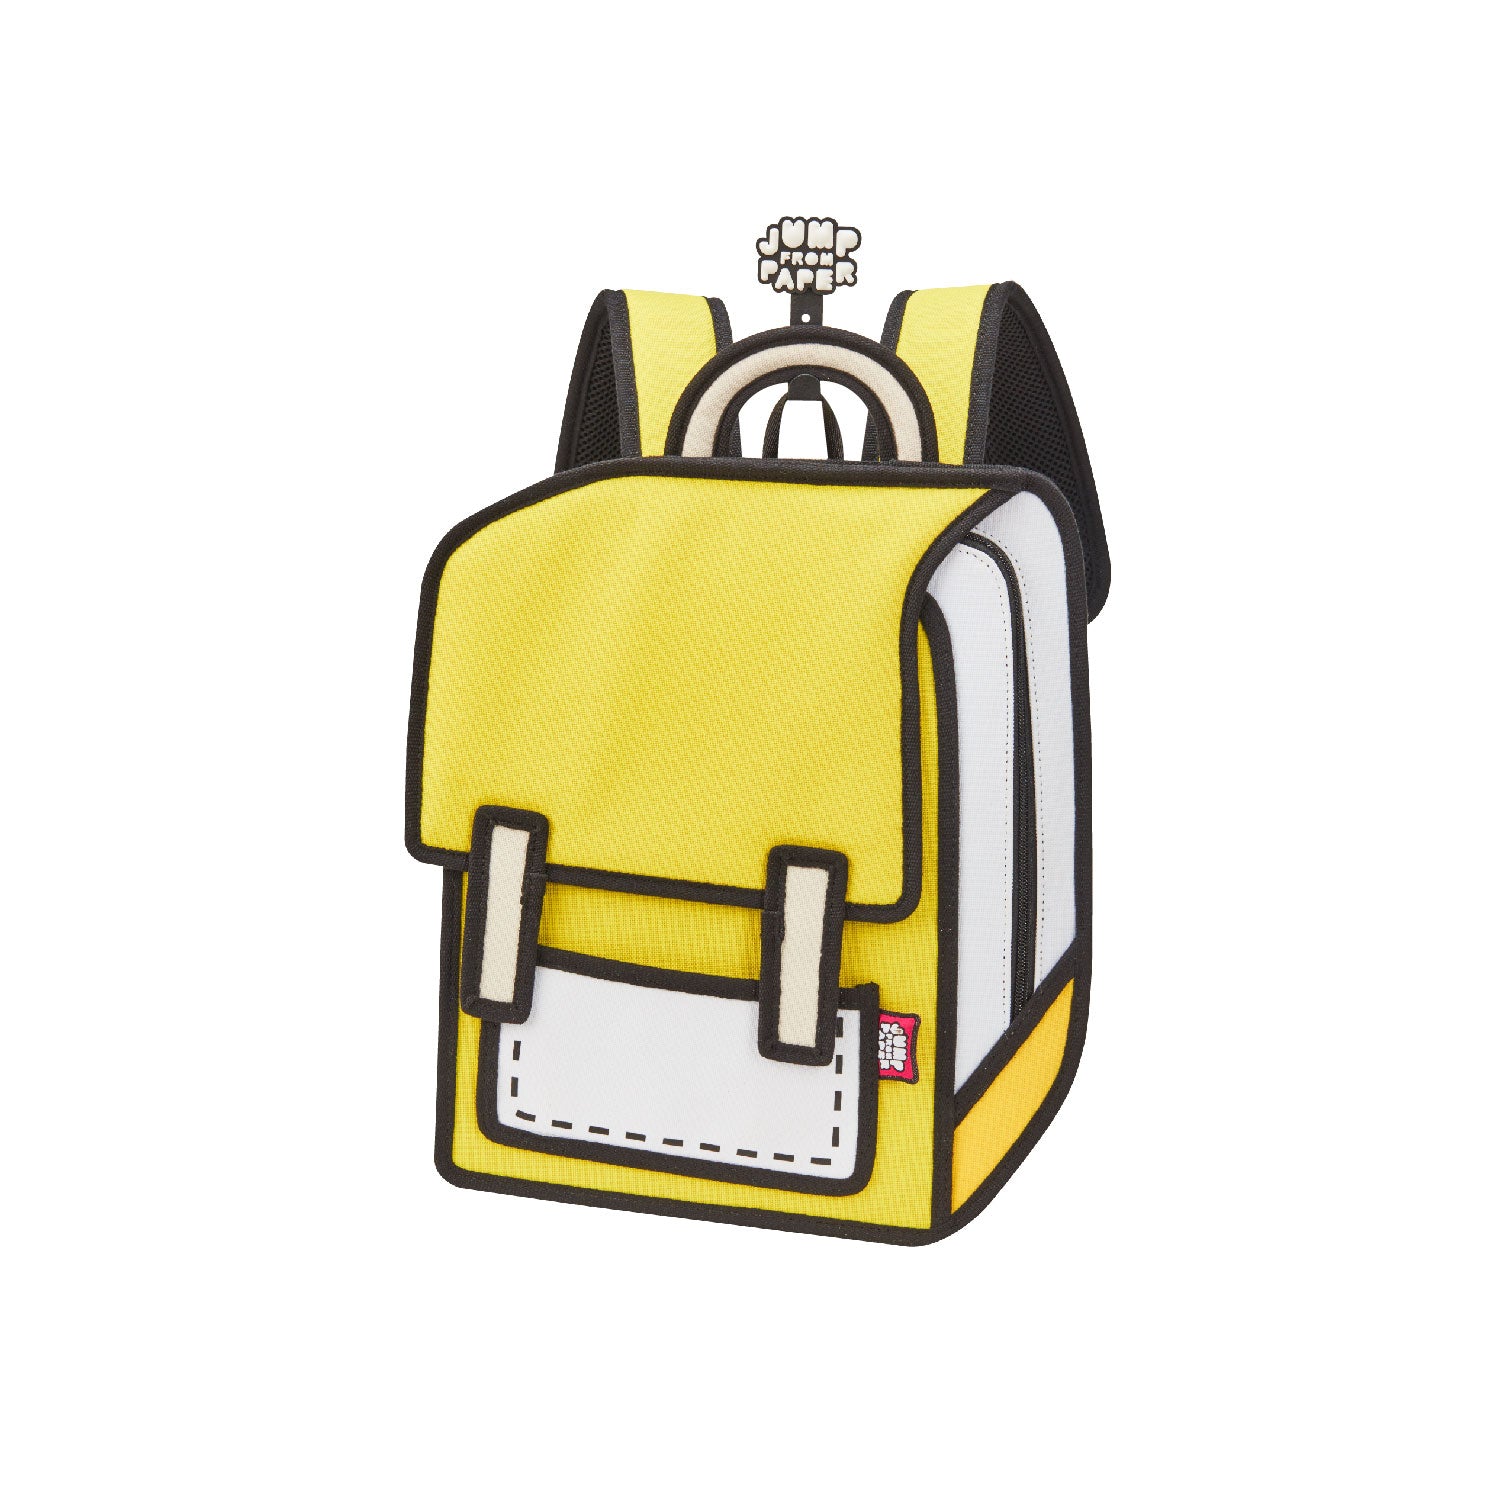  Aobiono Kawaii Backpack Cute Cartoon 3D Jump Style 2D Drawing  from Comic Paper Anime Bookbag School Supplies Fun Daypack (Yellow)